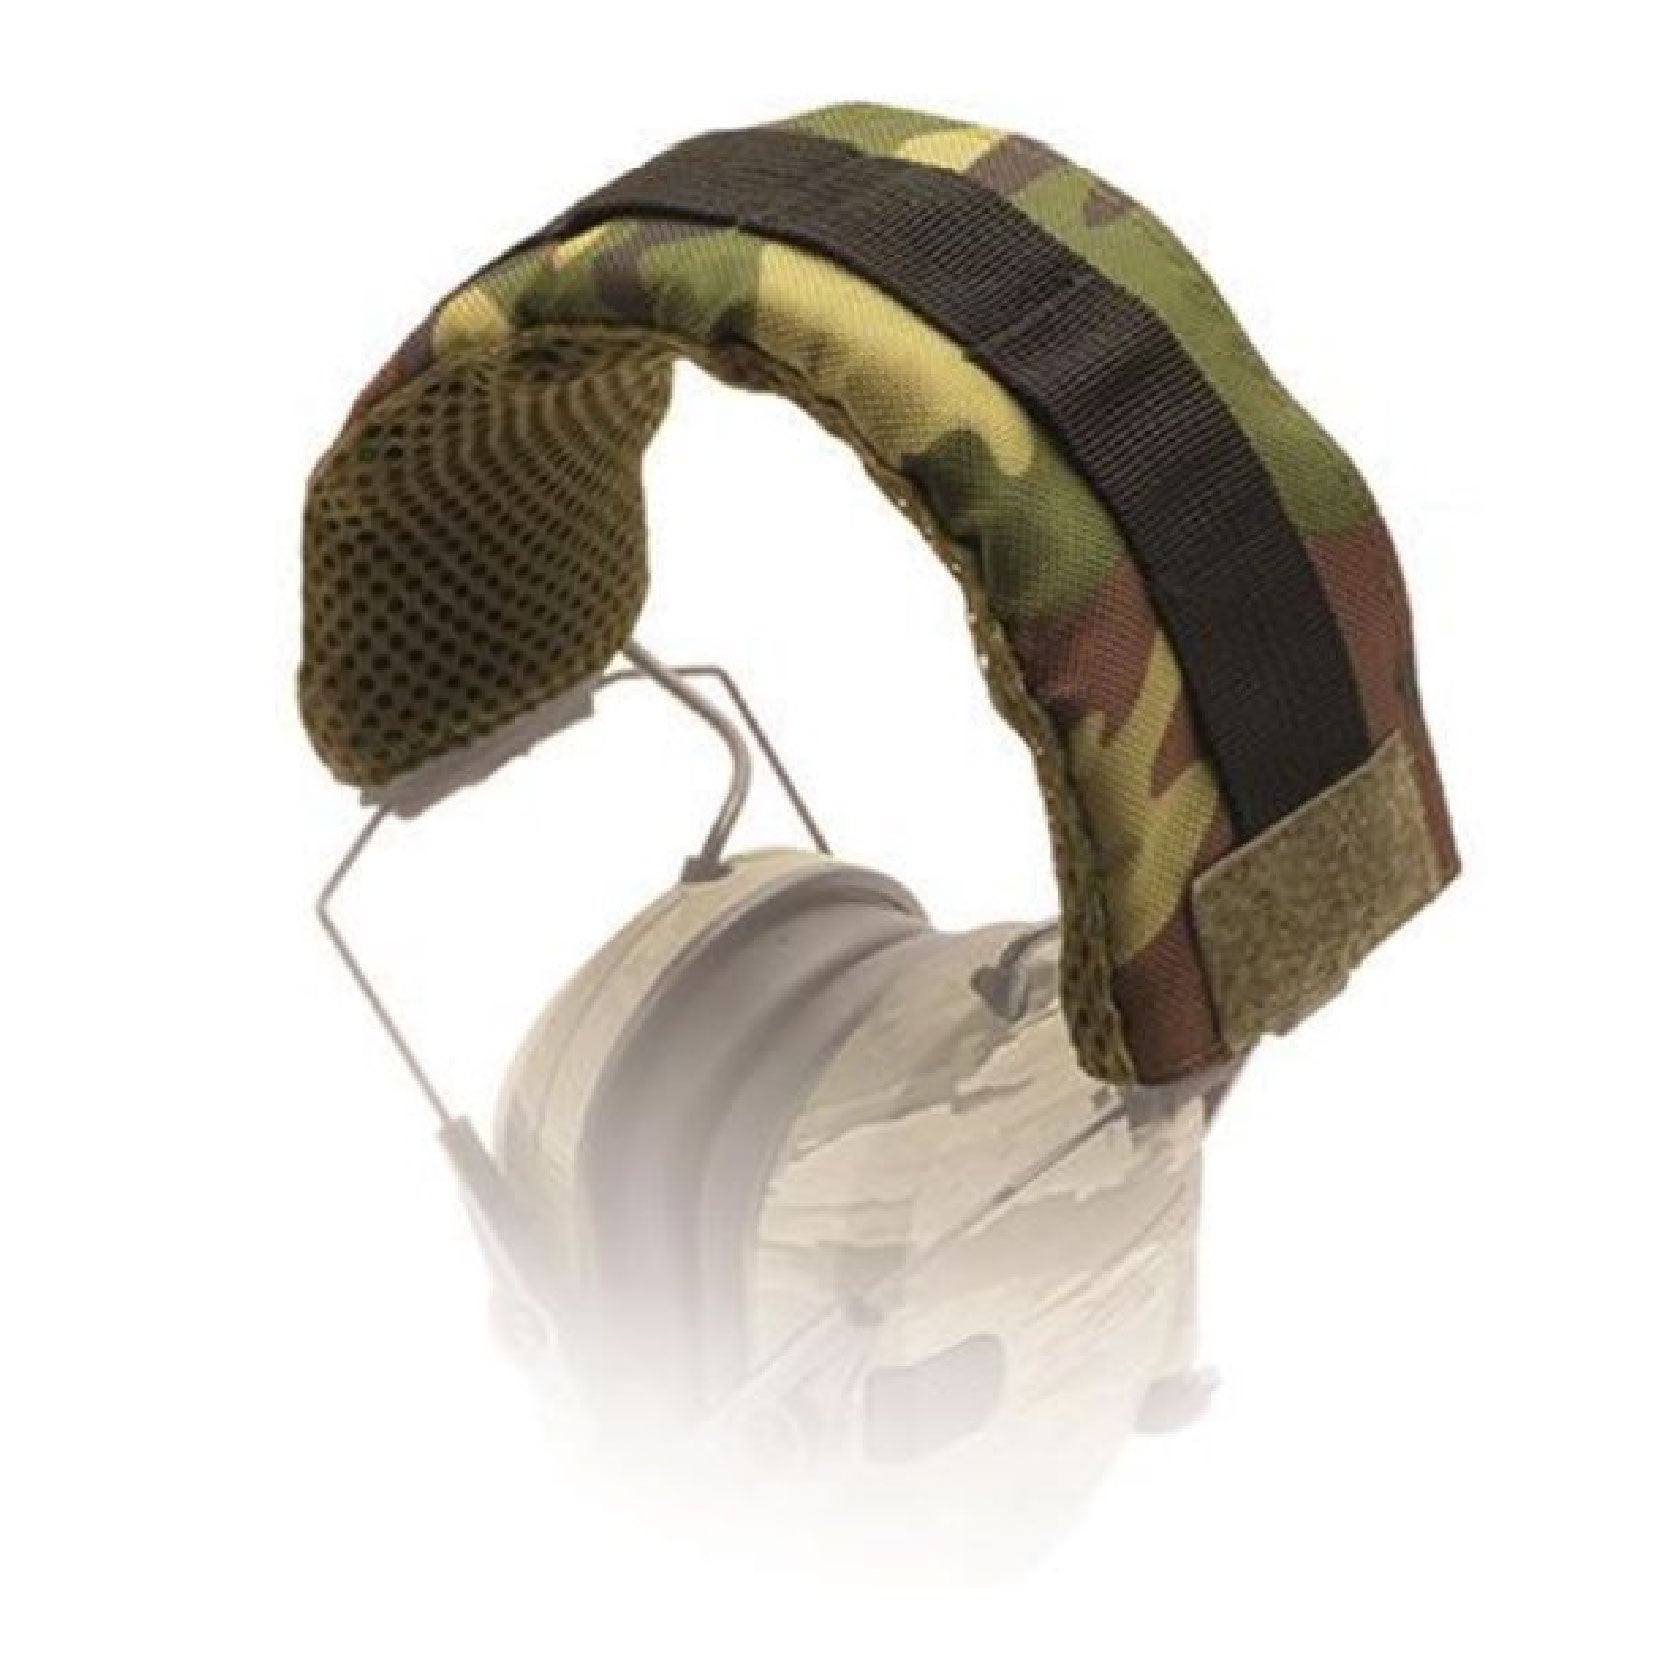 Walker's Razor Headband Wrap for Earmuffs with Hook & Loop